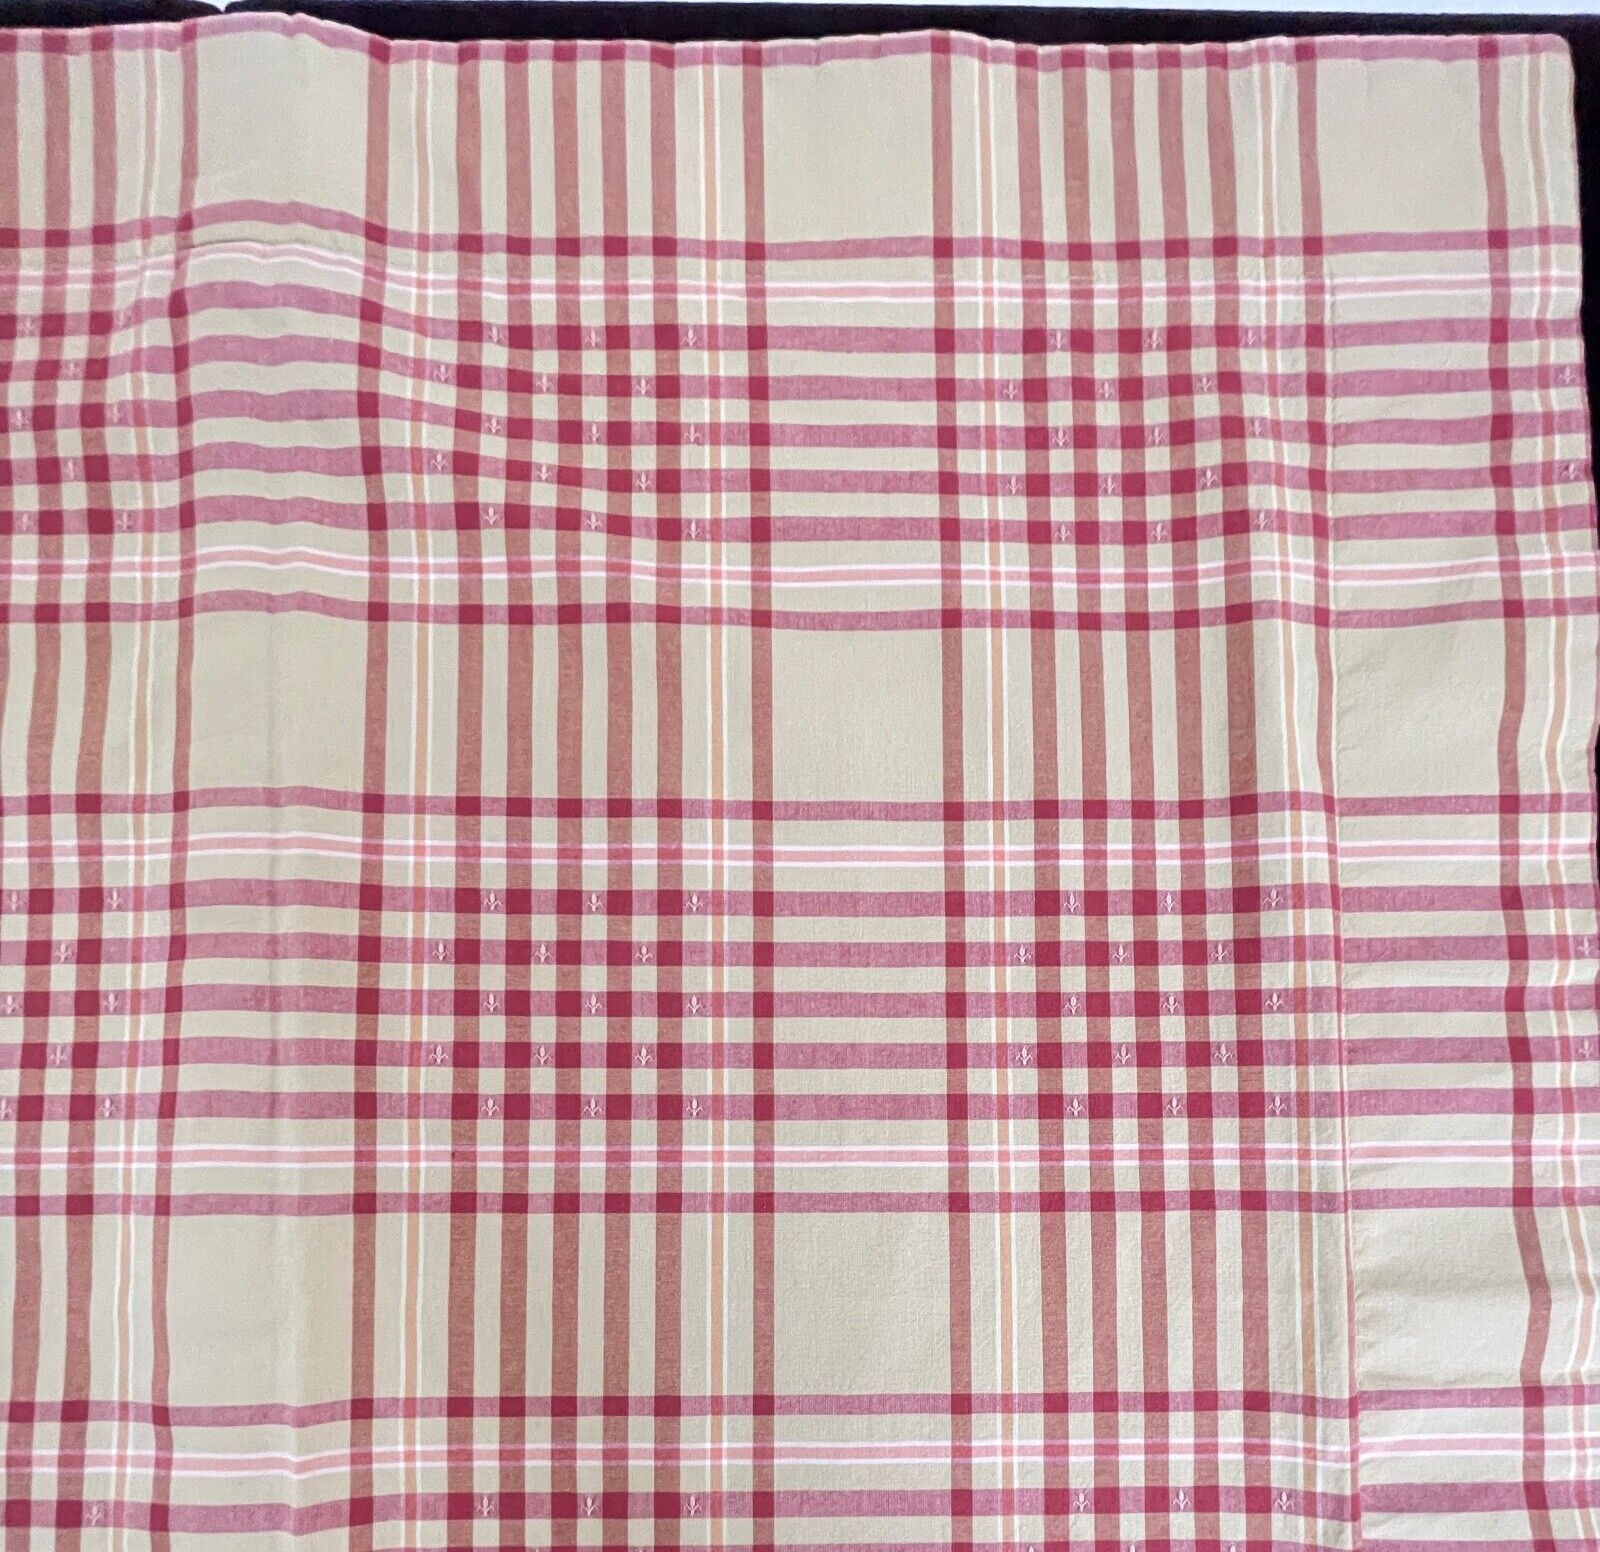 Custom Made Euro Pillow Sham in Ecru & Red Plaid Pattern 25”x 25”  YY722